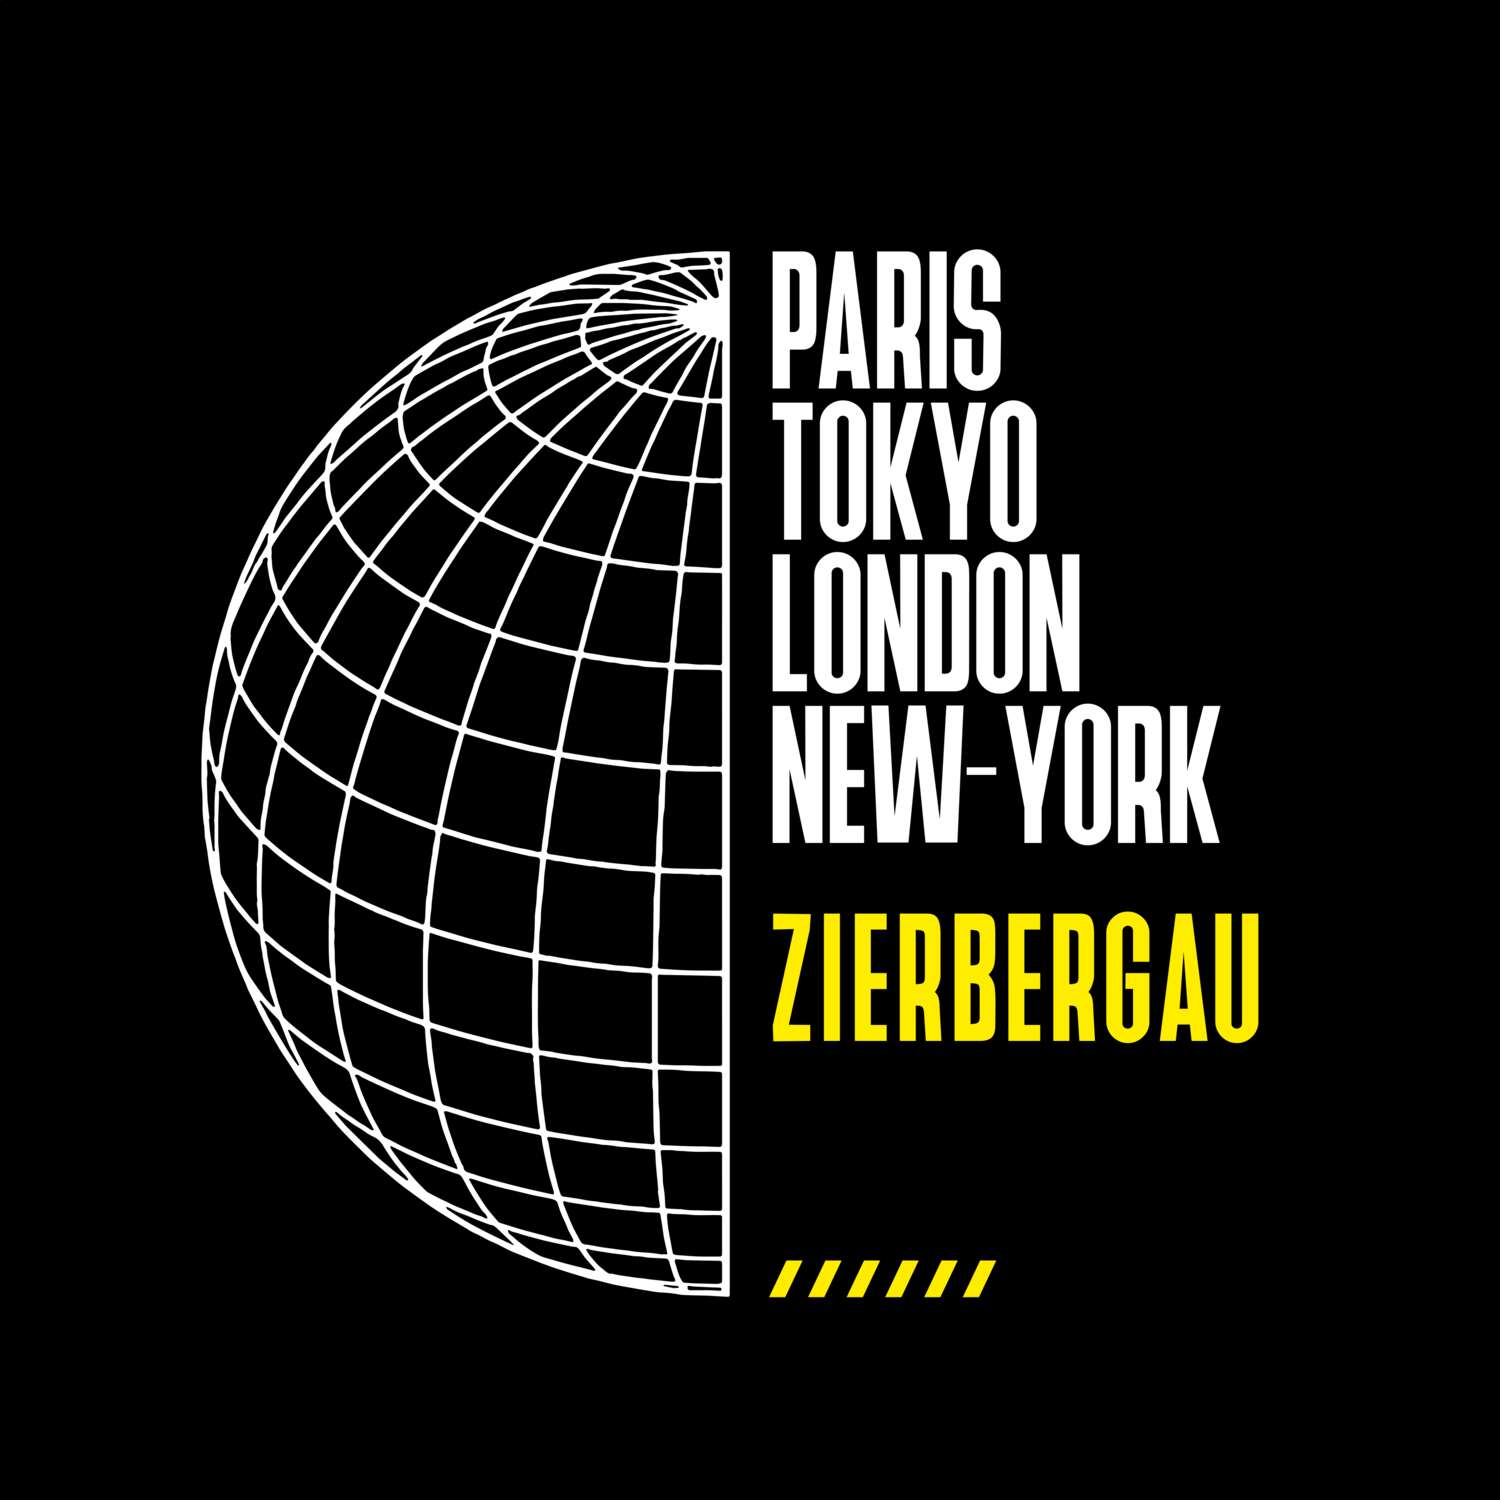 Zierbergau T-Shirt »Paris Tokyo London«